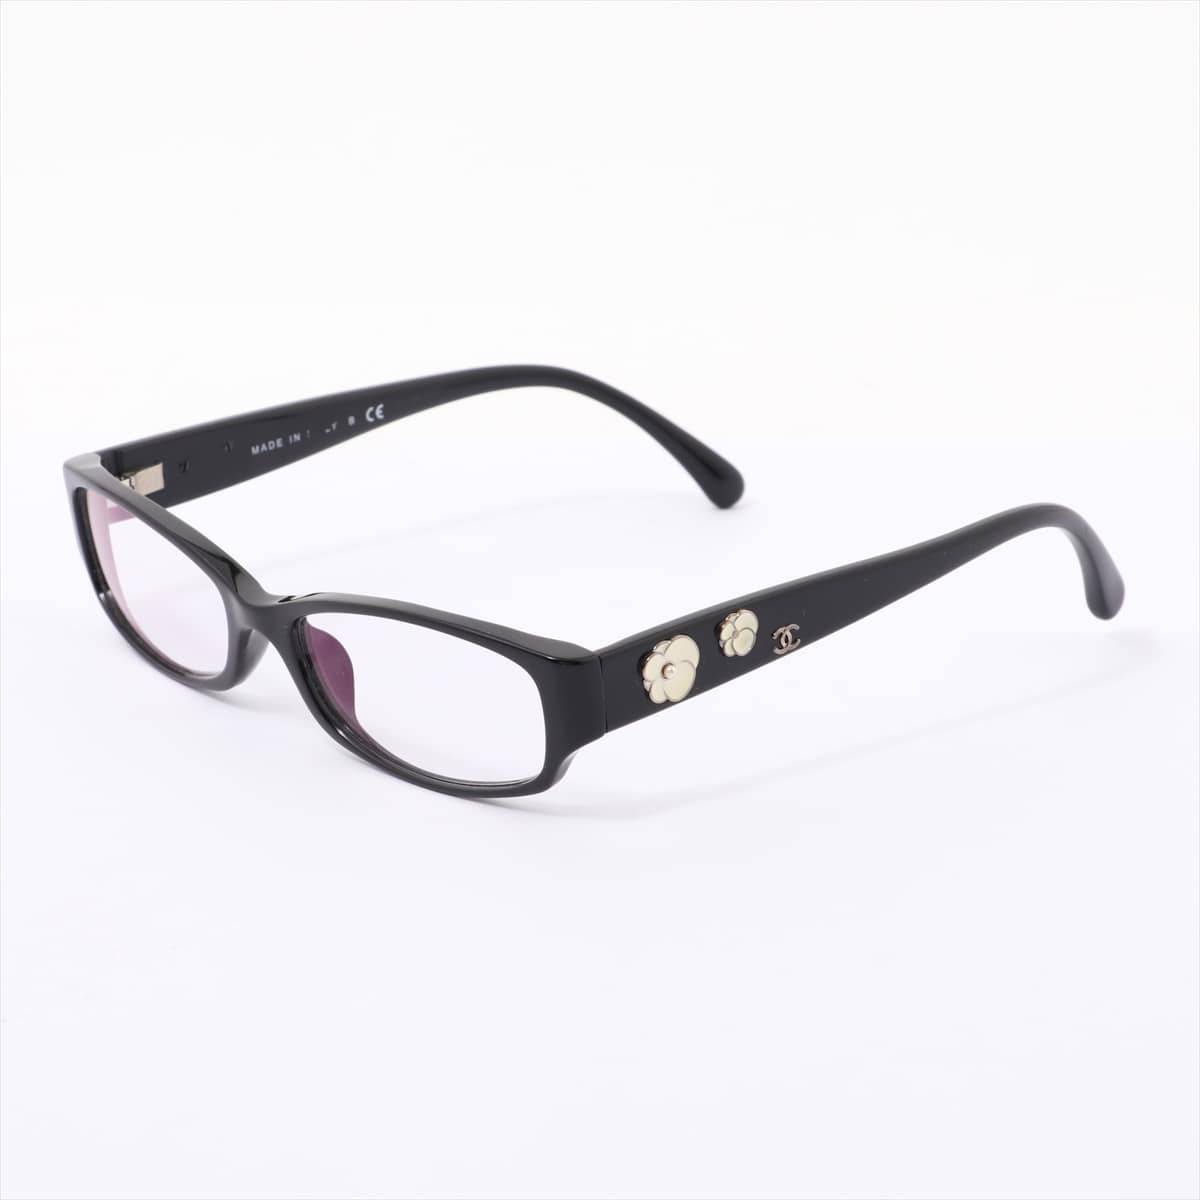 Chanel 3198-H-A Camelia Glasses Plastic Black